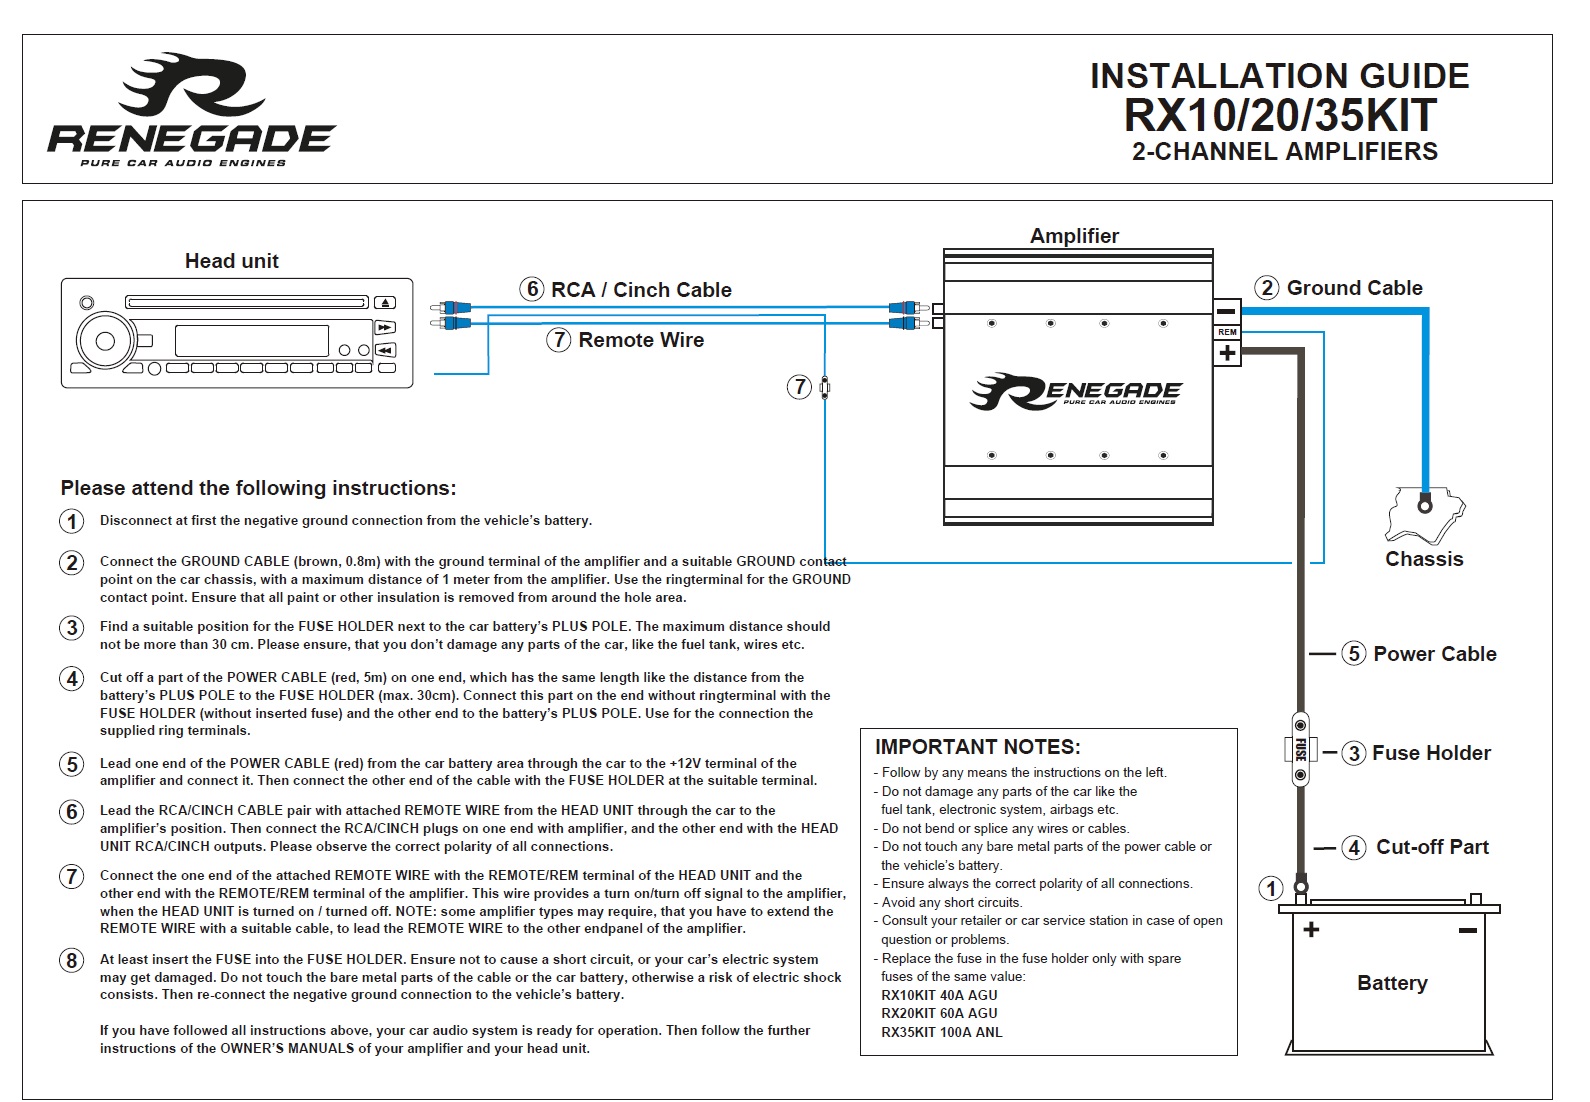 Renegade RX35KIT Verstärker Installations Kit 35mm² Anschluss Set